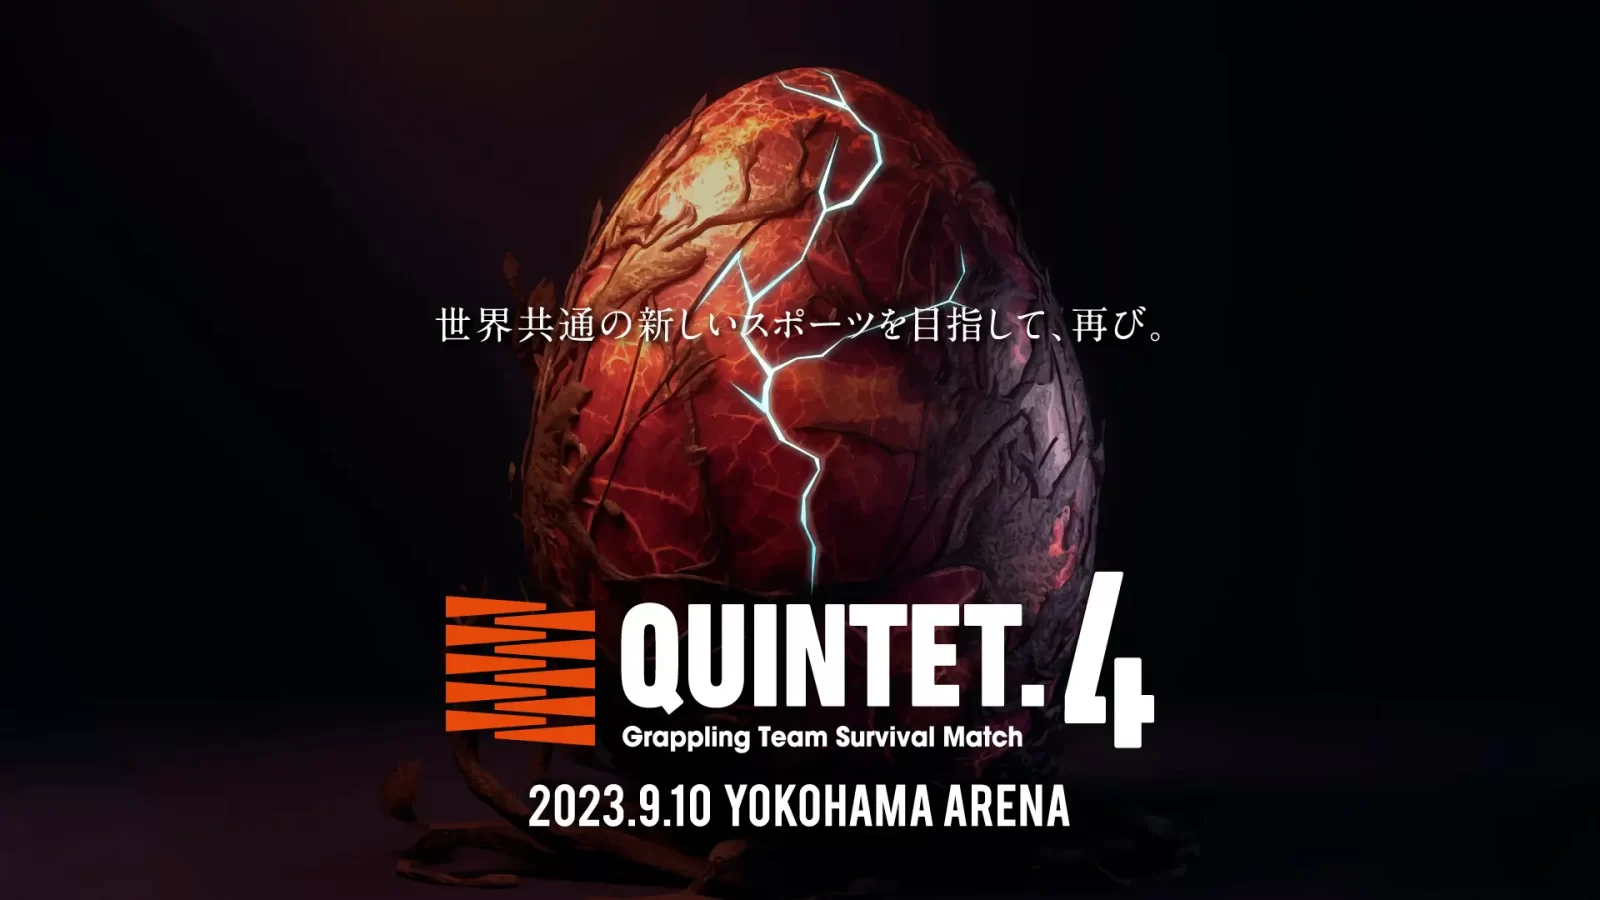 Quintet 4 k-1 reboot